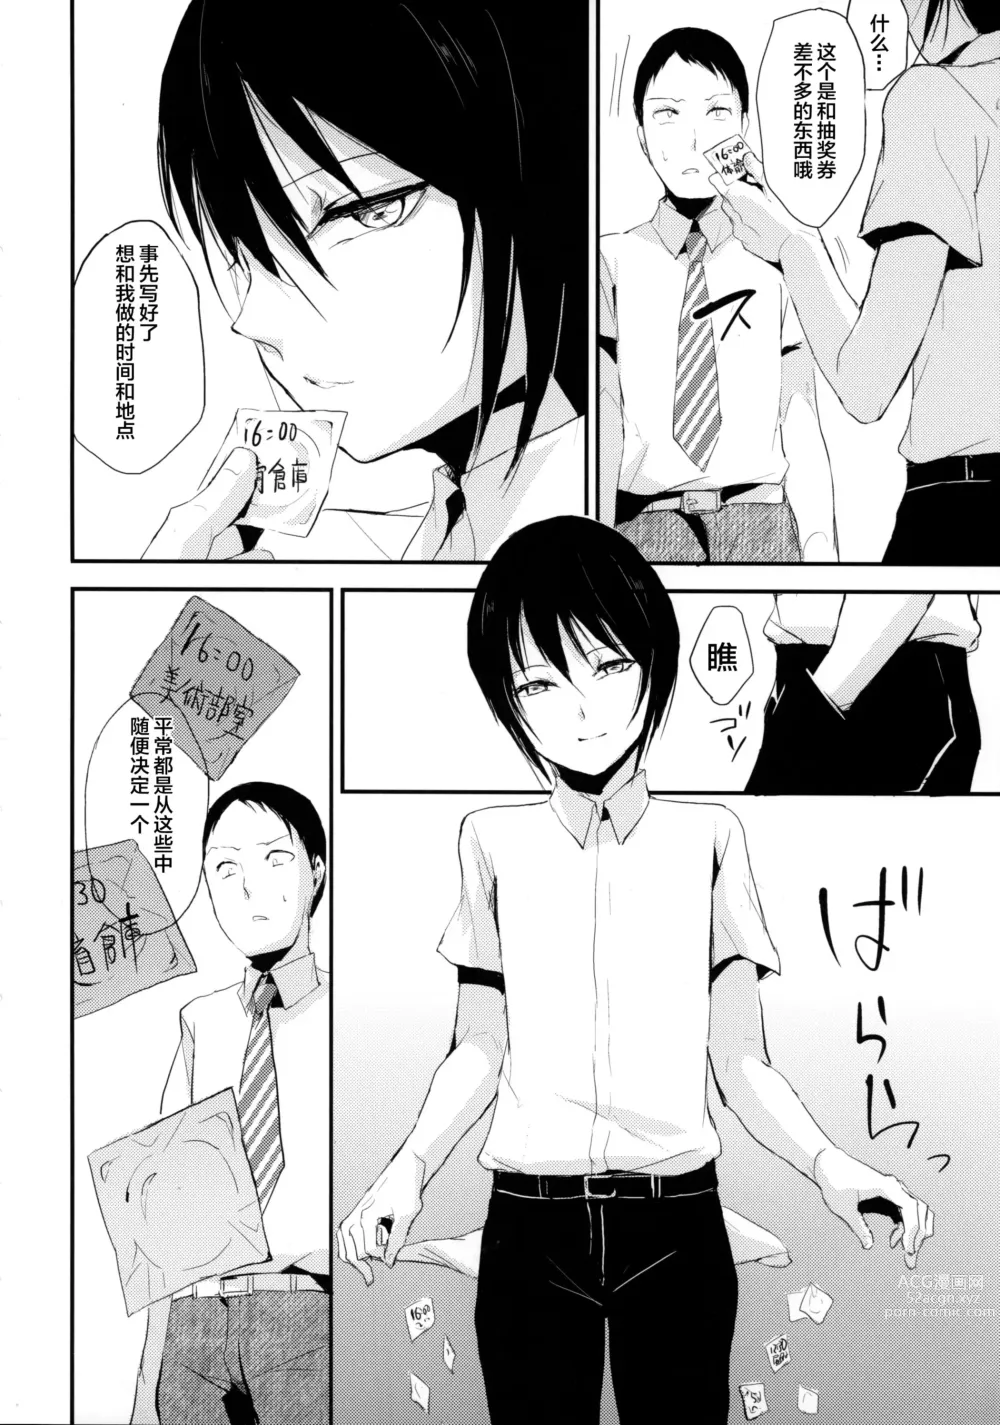 Page 8 of manga 放課後のタスク